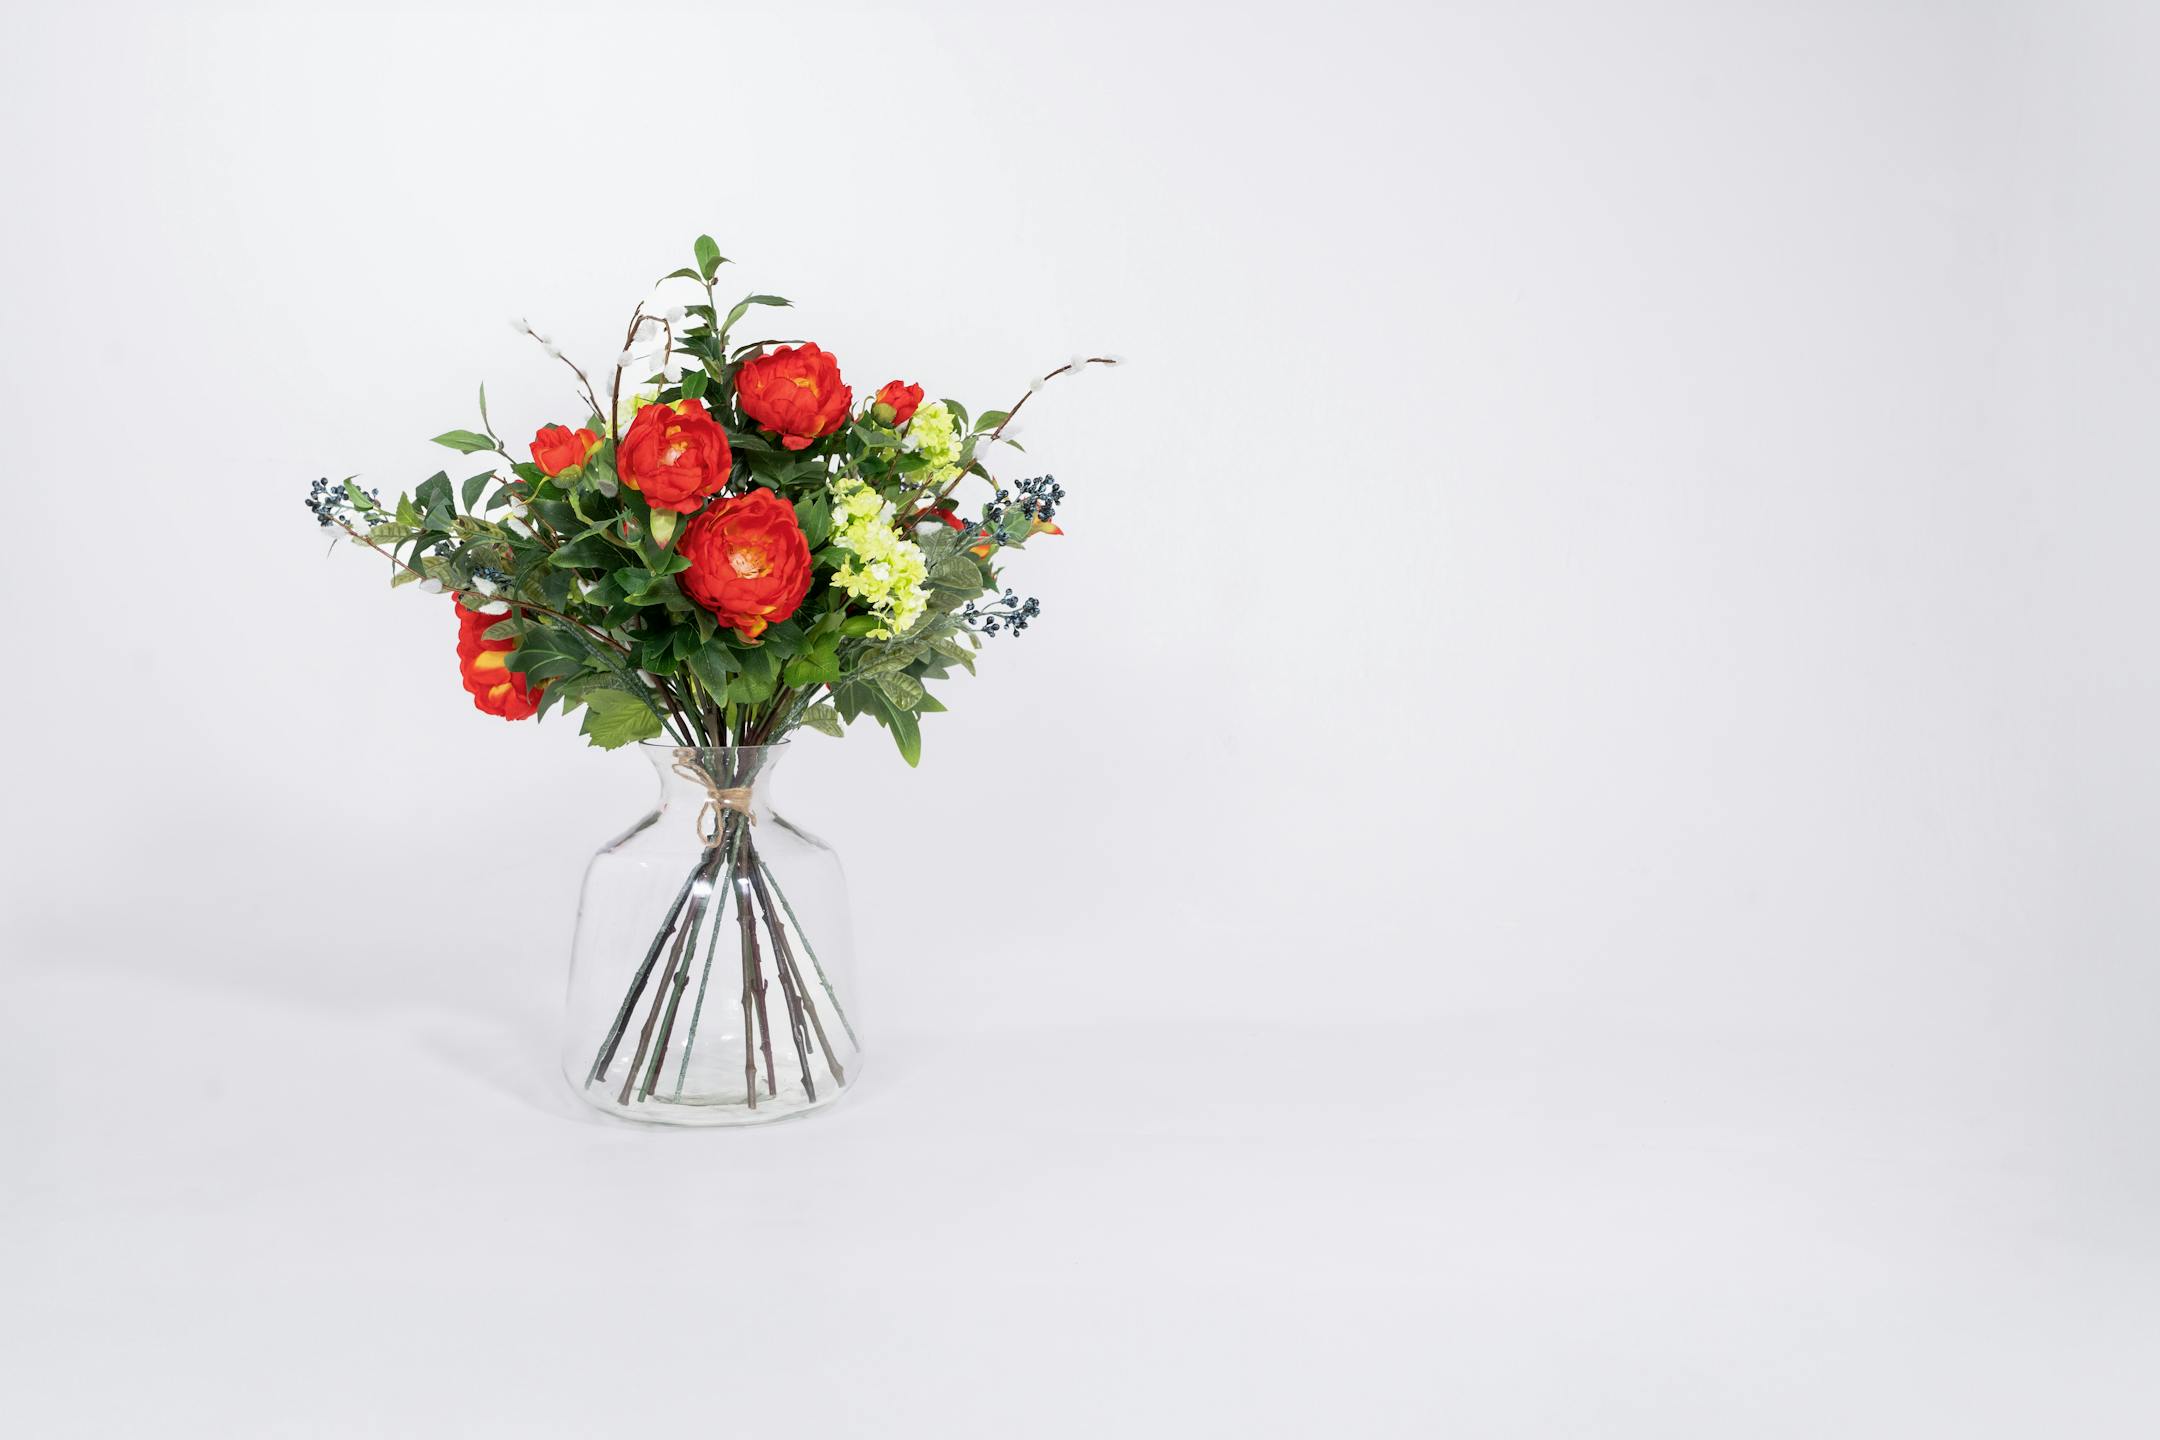 Artificial regal bouquet in glass vase